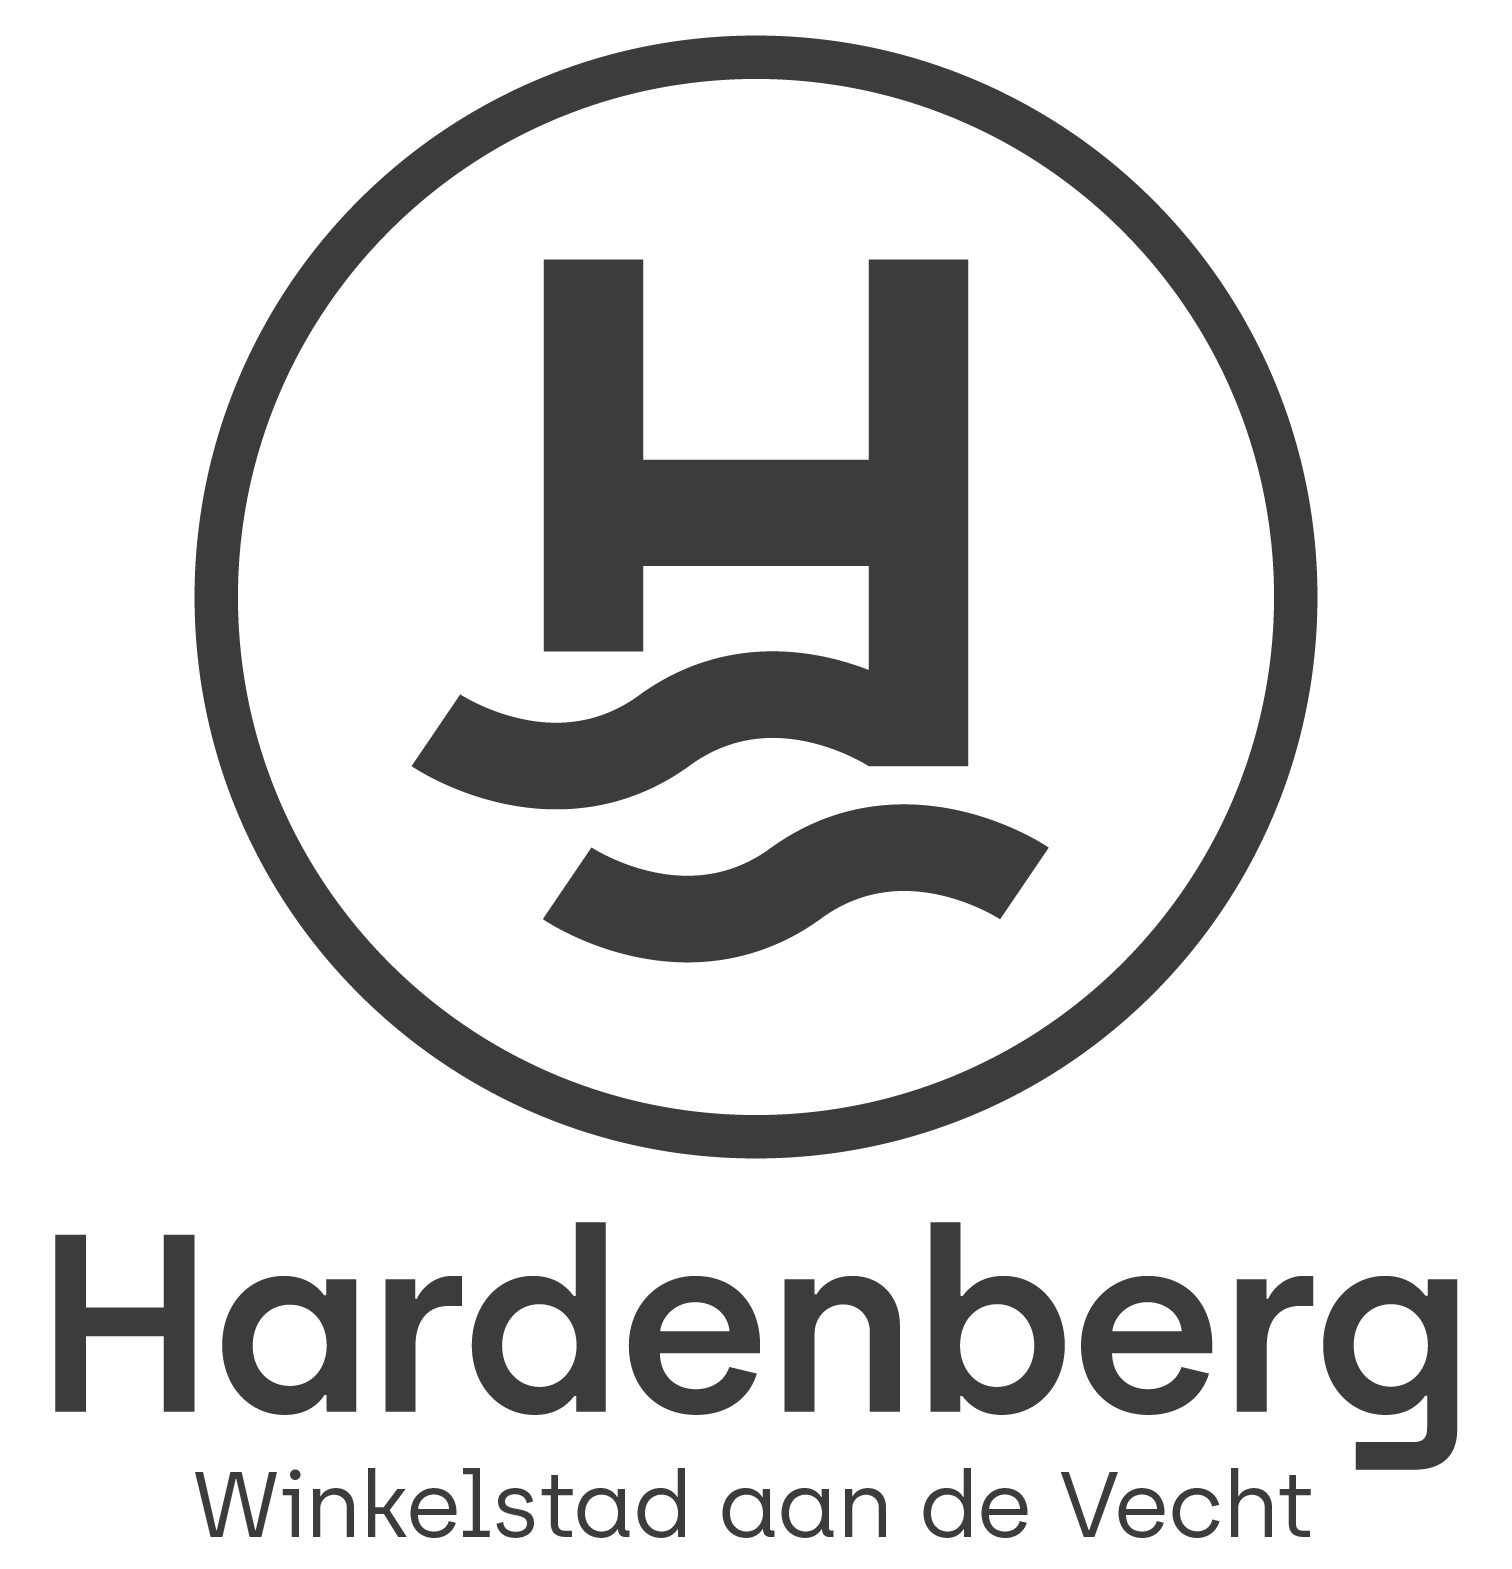 Phion - Winkelstad Hardenberg